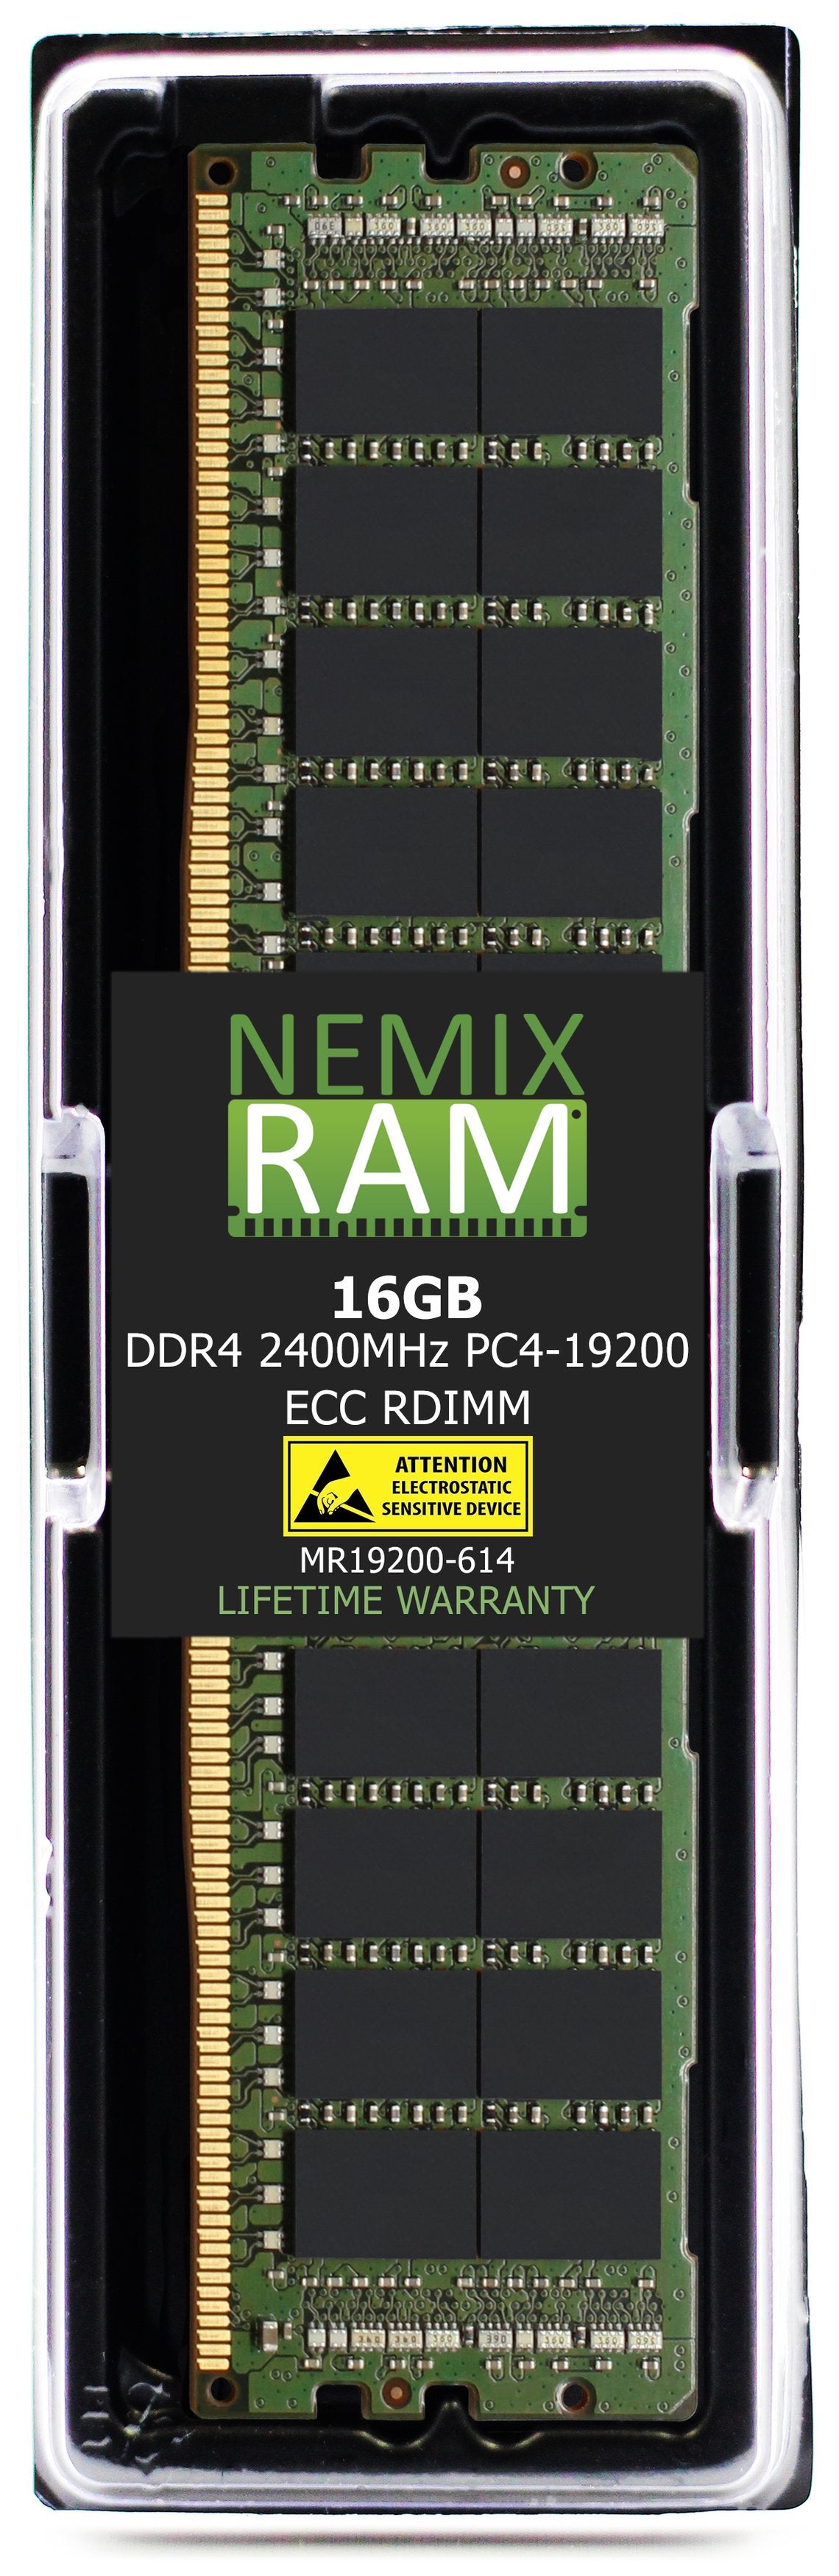 NEC Express5800 T120g Memory Module N8102-688F 16GB DDR4 2400MHZ PC4-19200 RDIMM